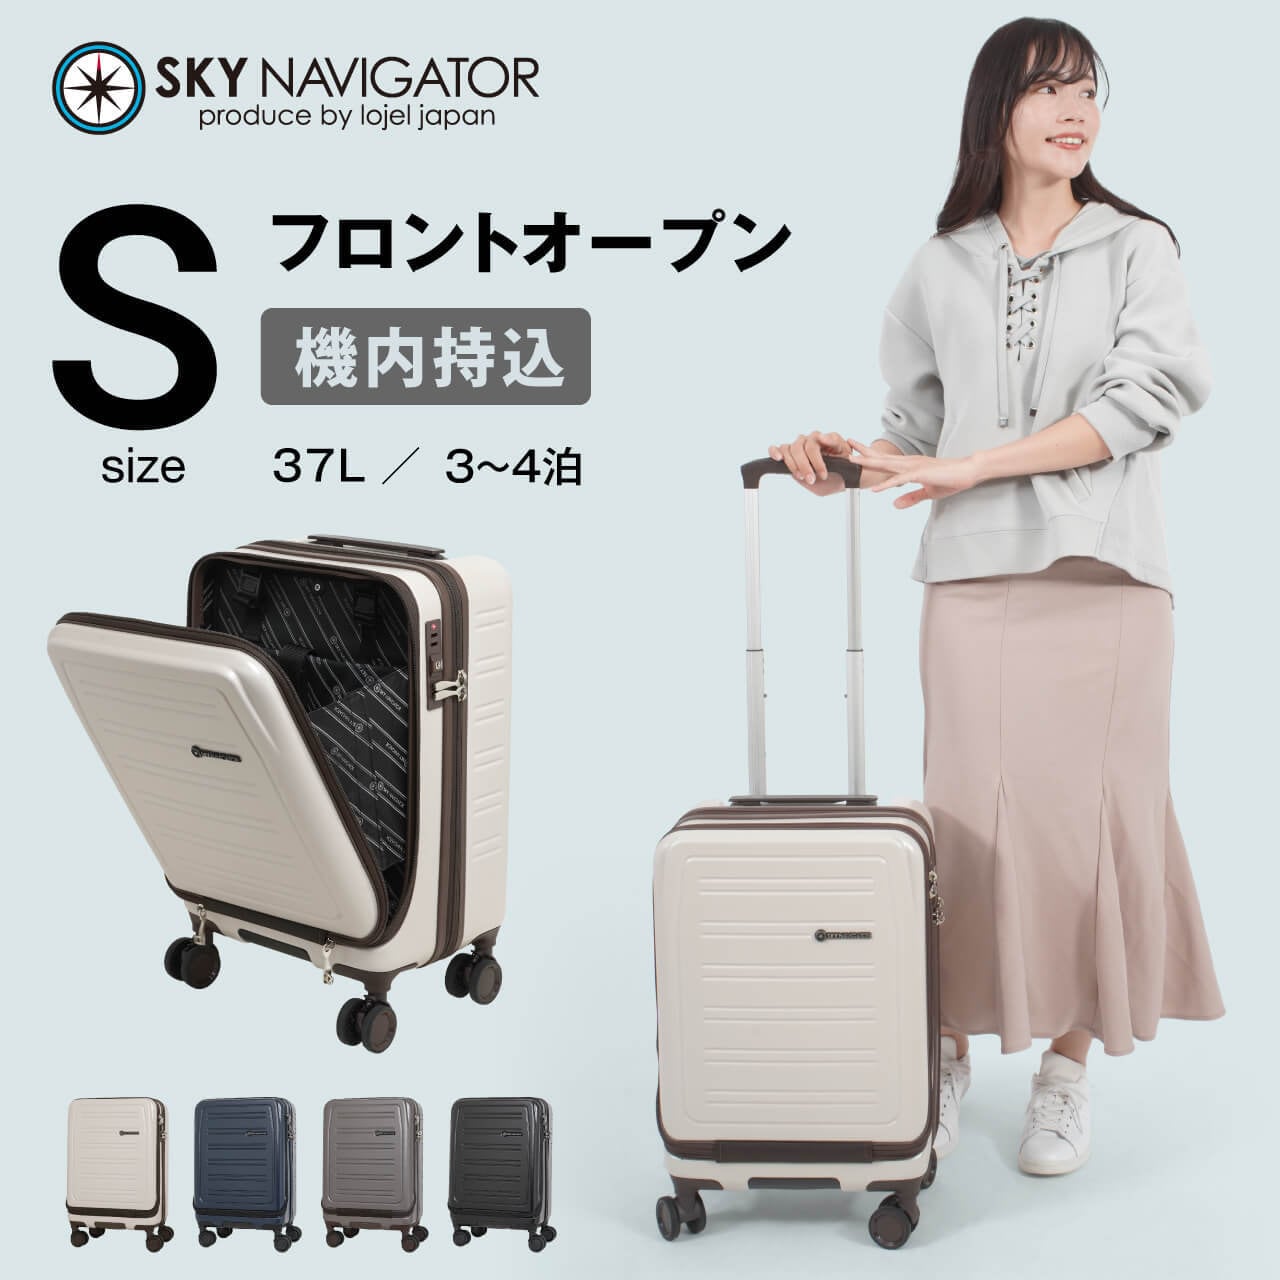 SKYNAVIGATOR スーツケース Sサイズ 機内持ち込み フロントオープン ...